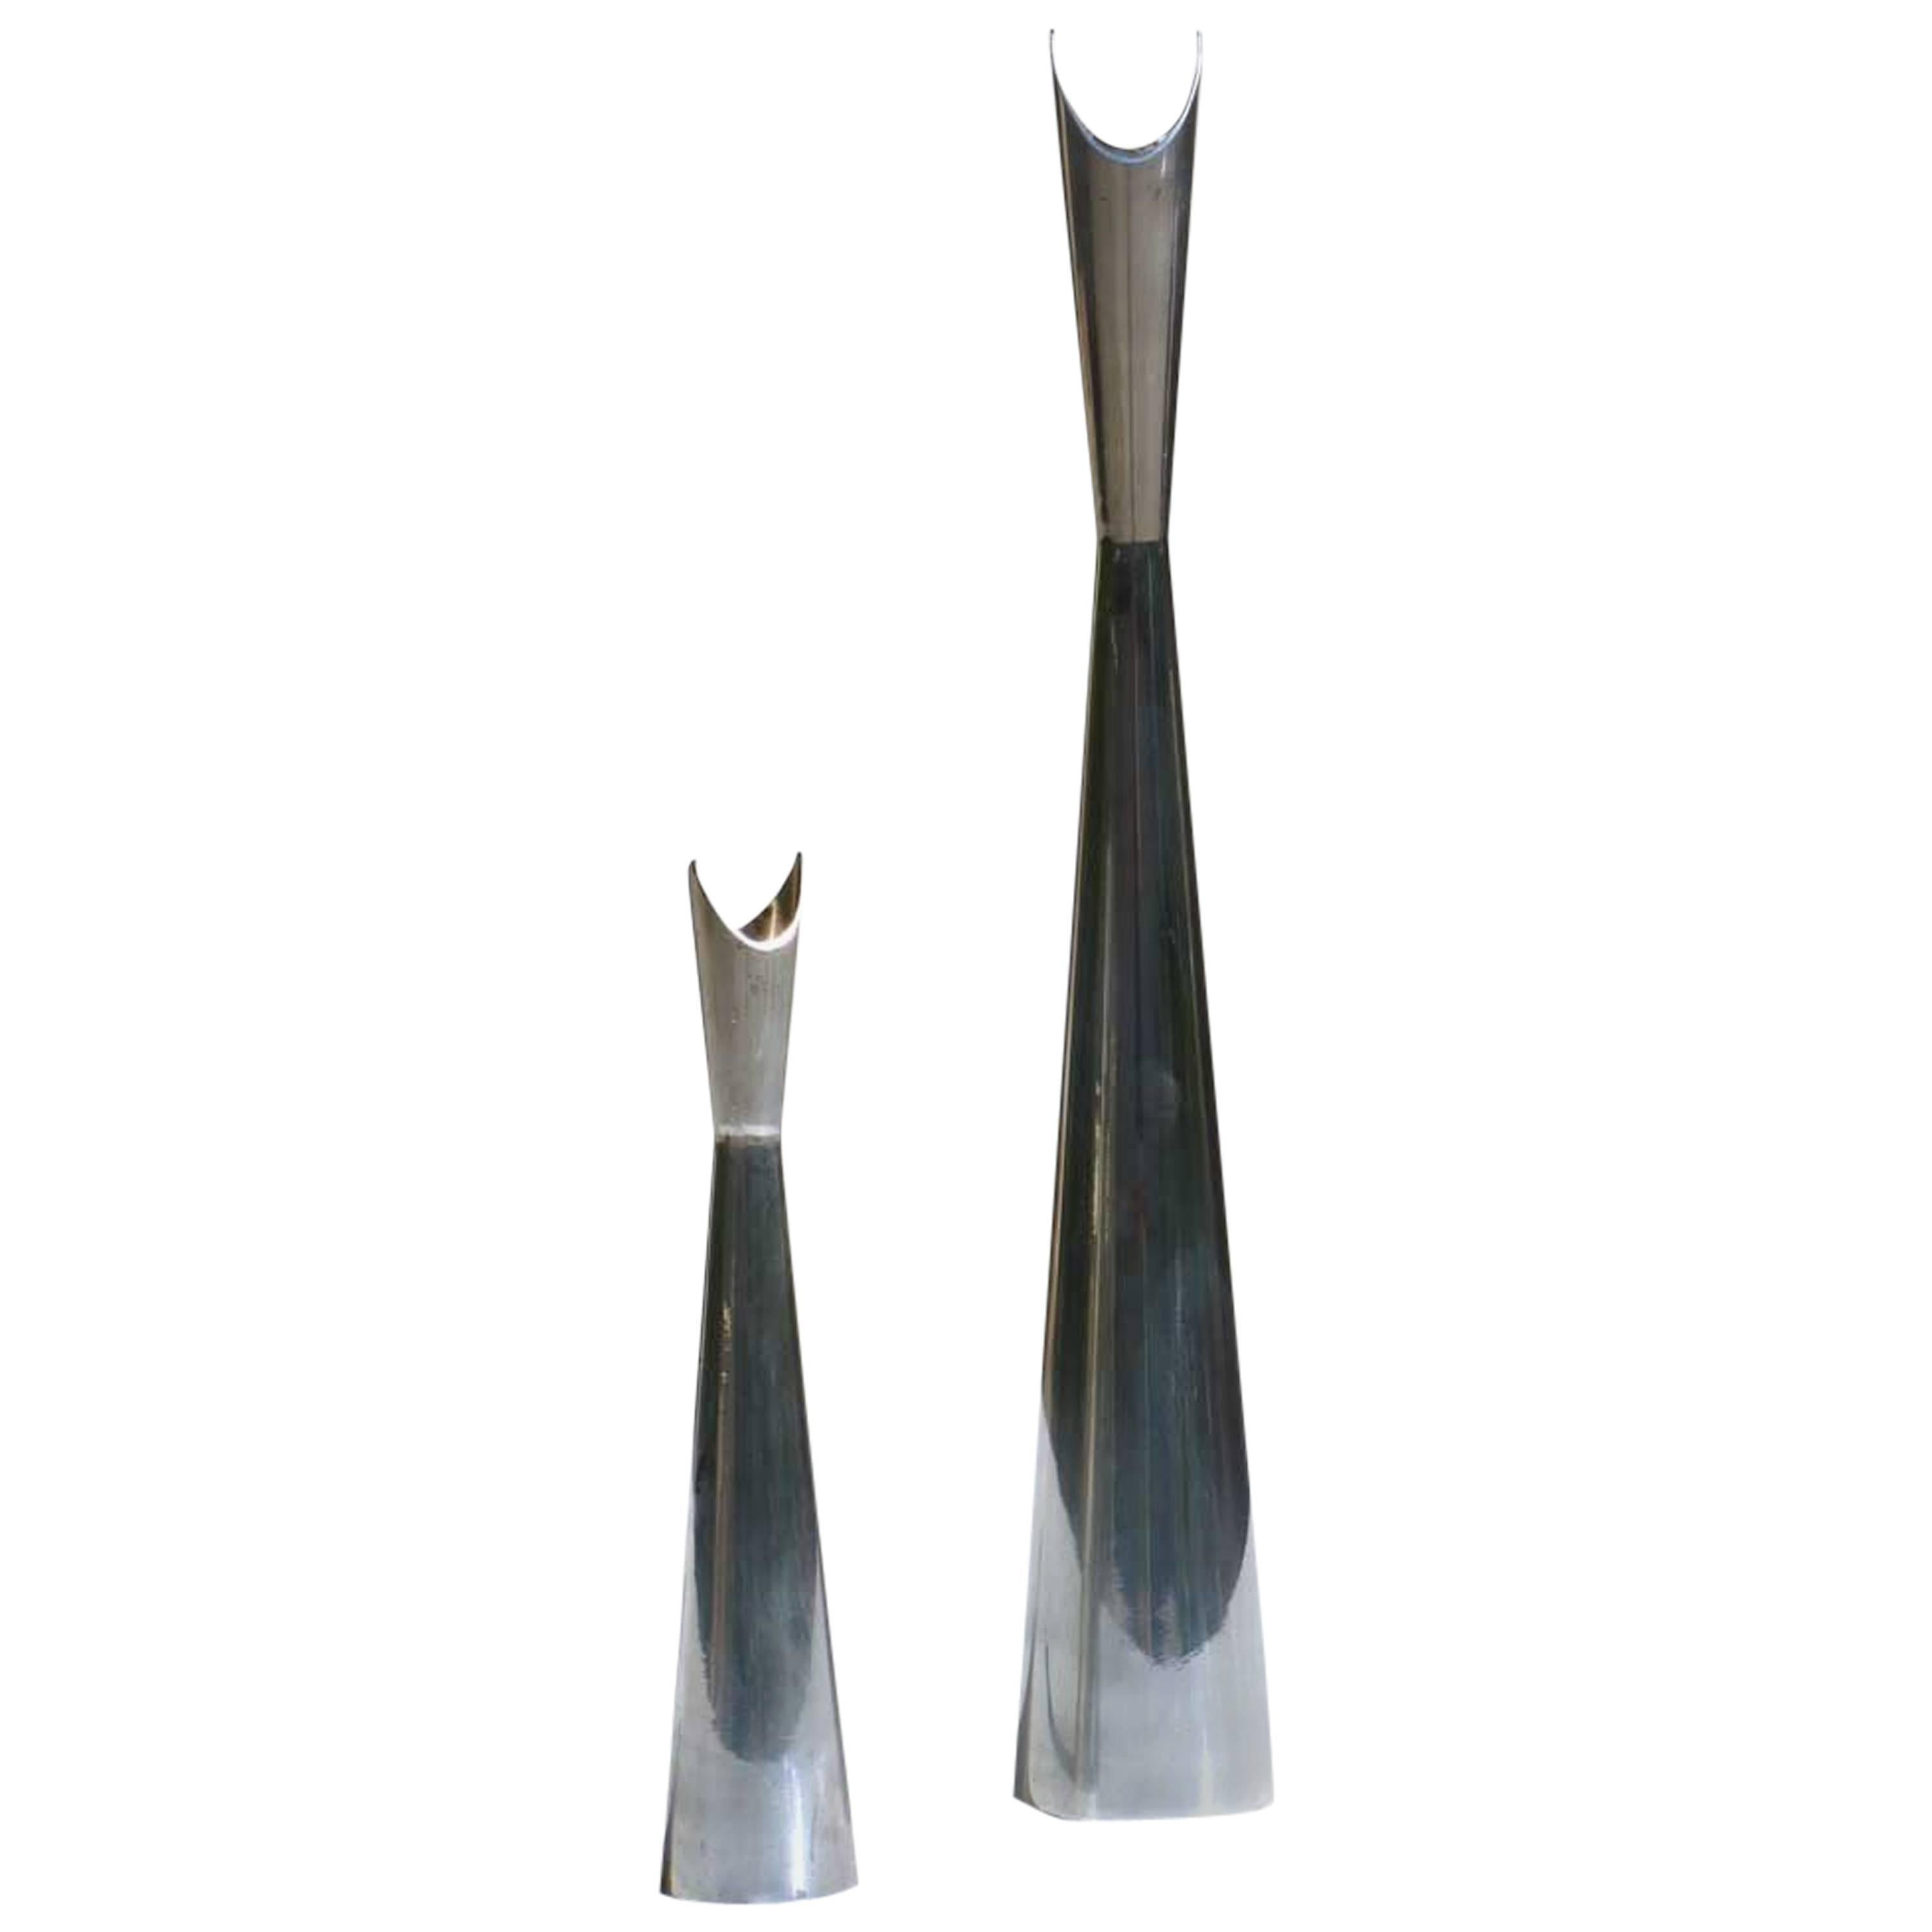 "Cardinali" Lino Sabattini by Christofle Design Midcentury 1950s Silver Vases